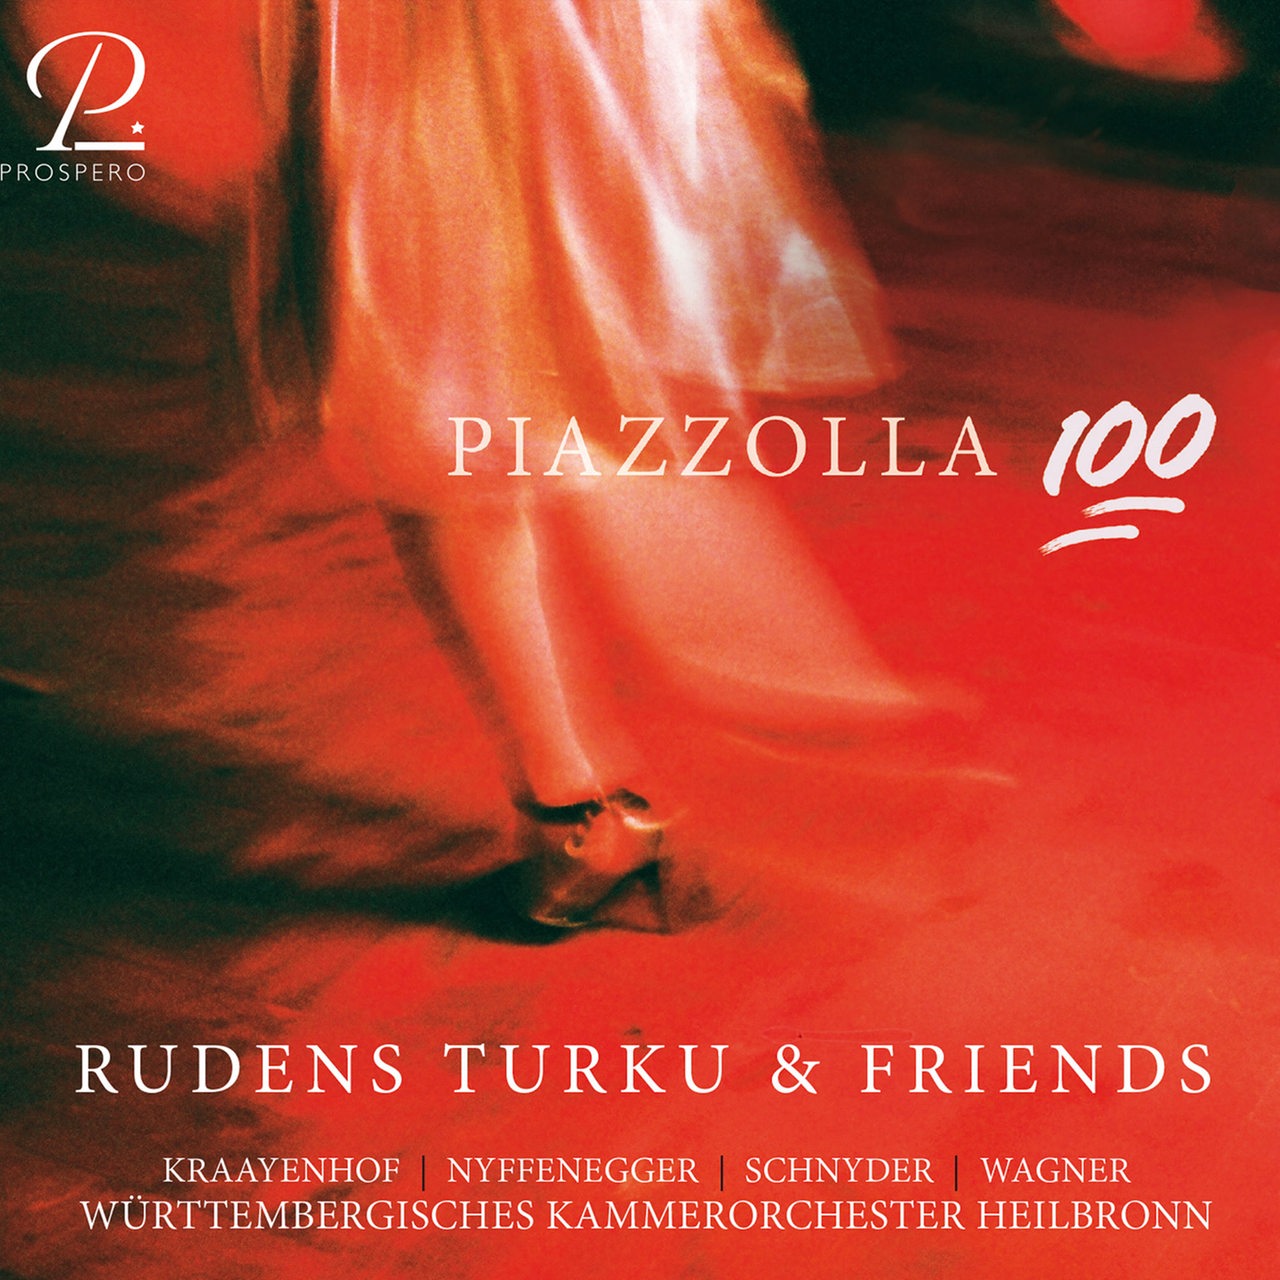 Albumcover Rudens Turku & Friends, Album "Piazzolla 100"